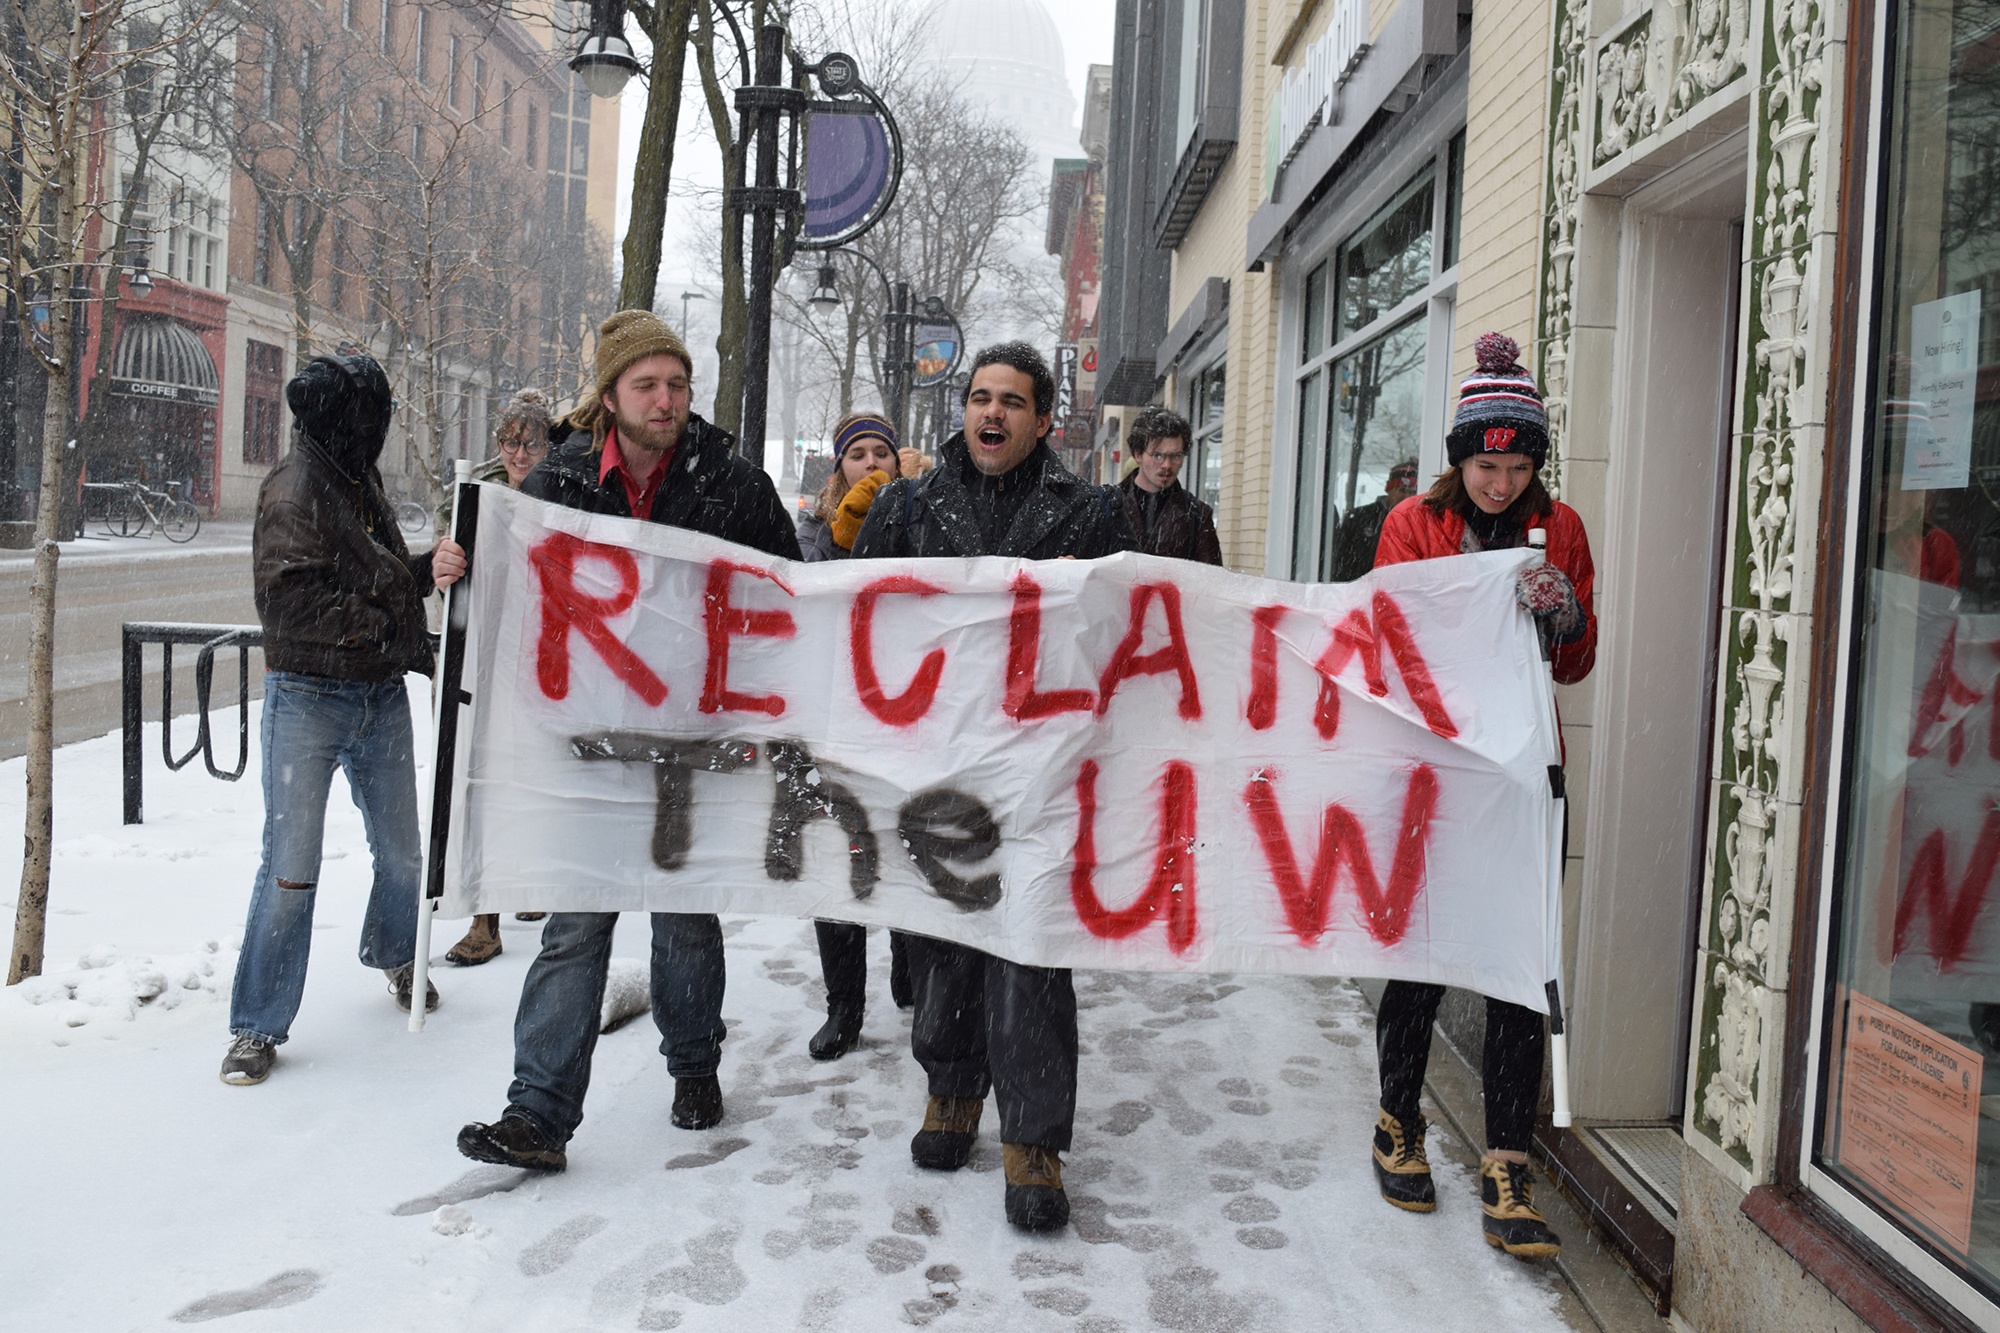 UW students marching